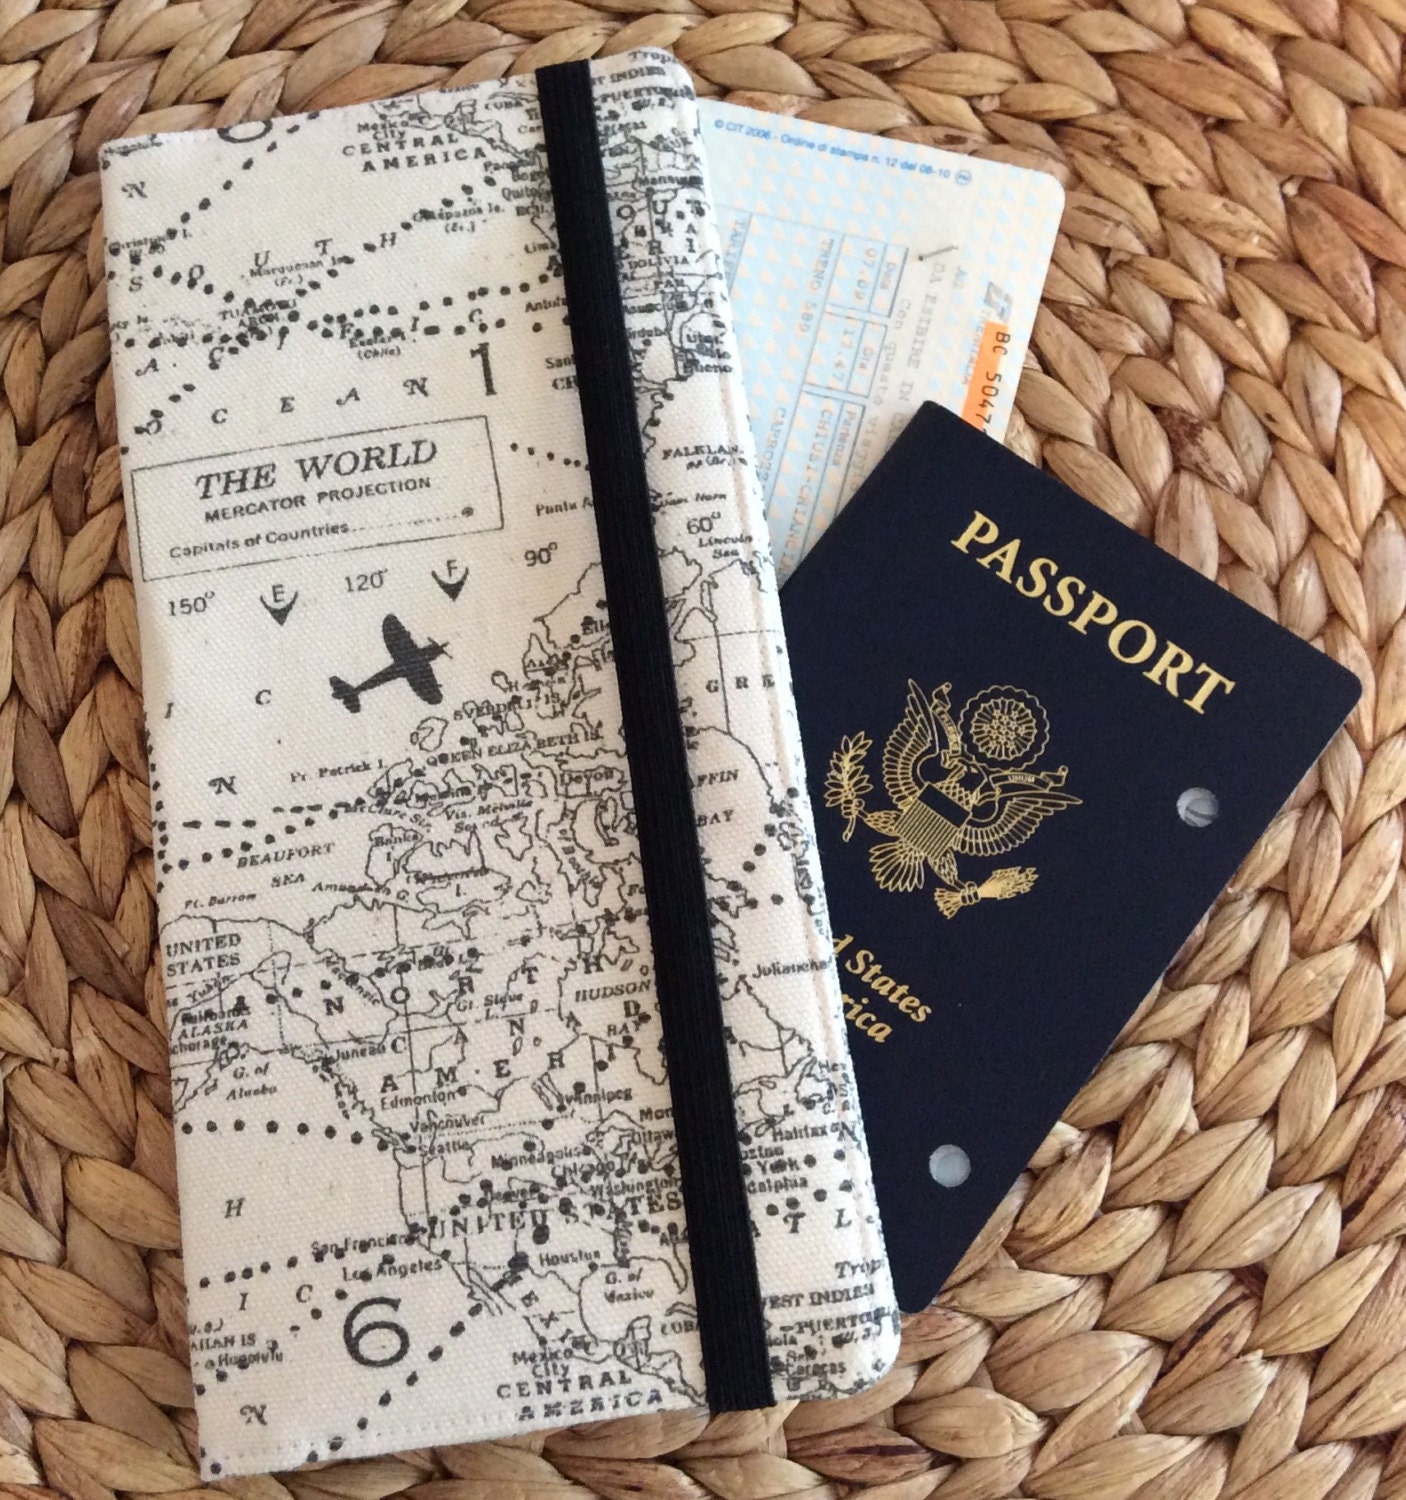 8 passport travel wallet